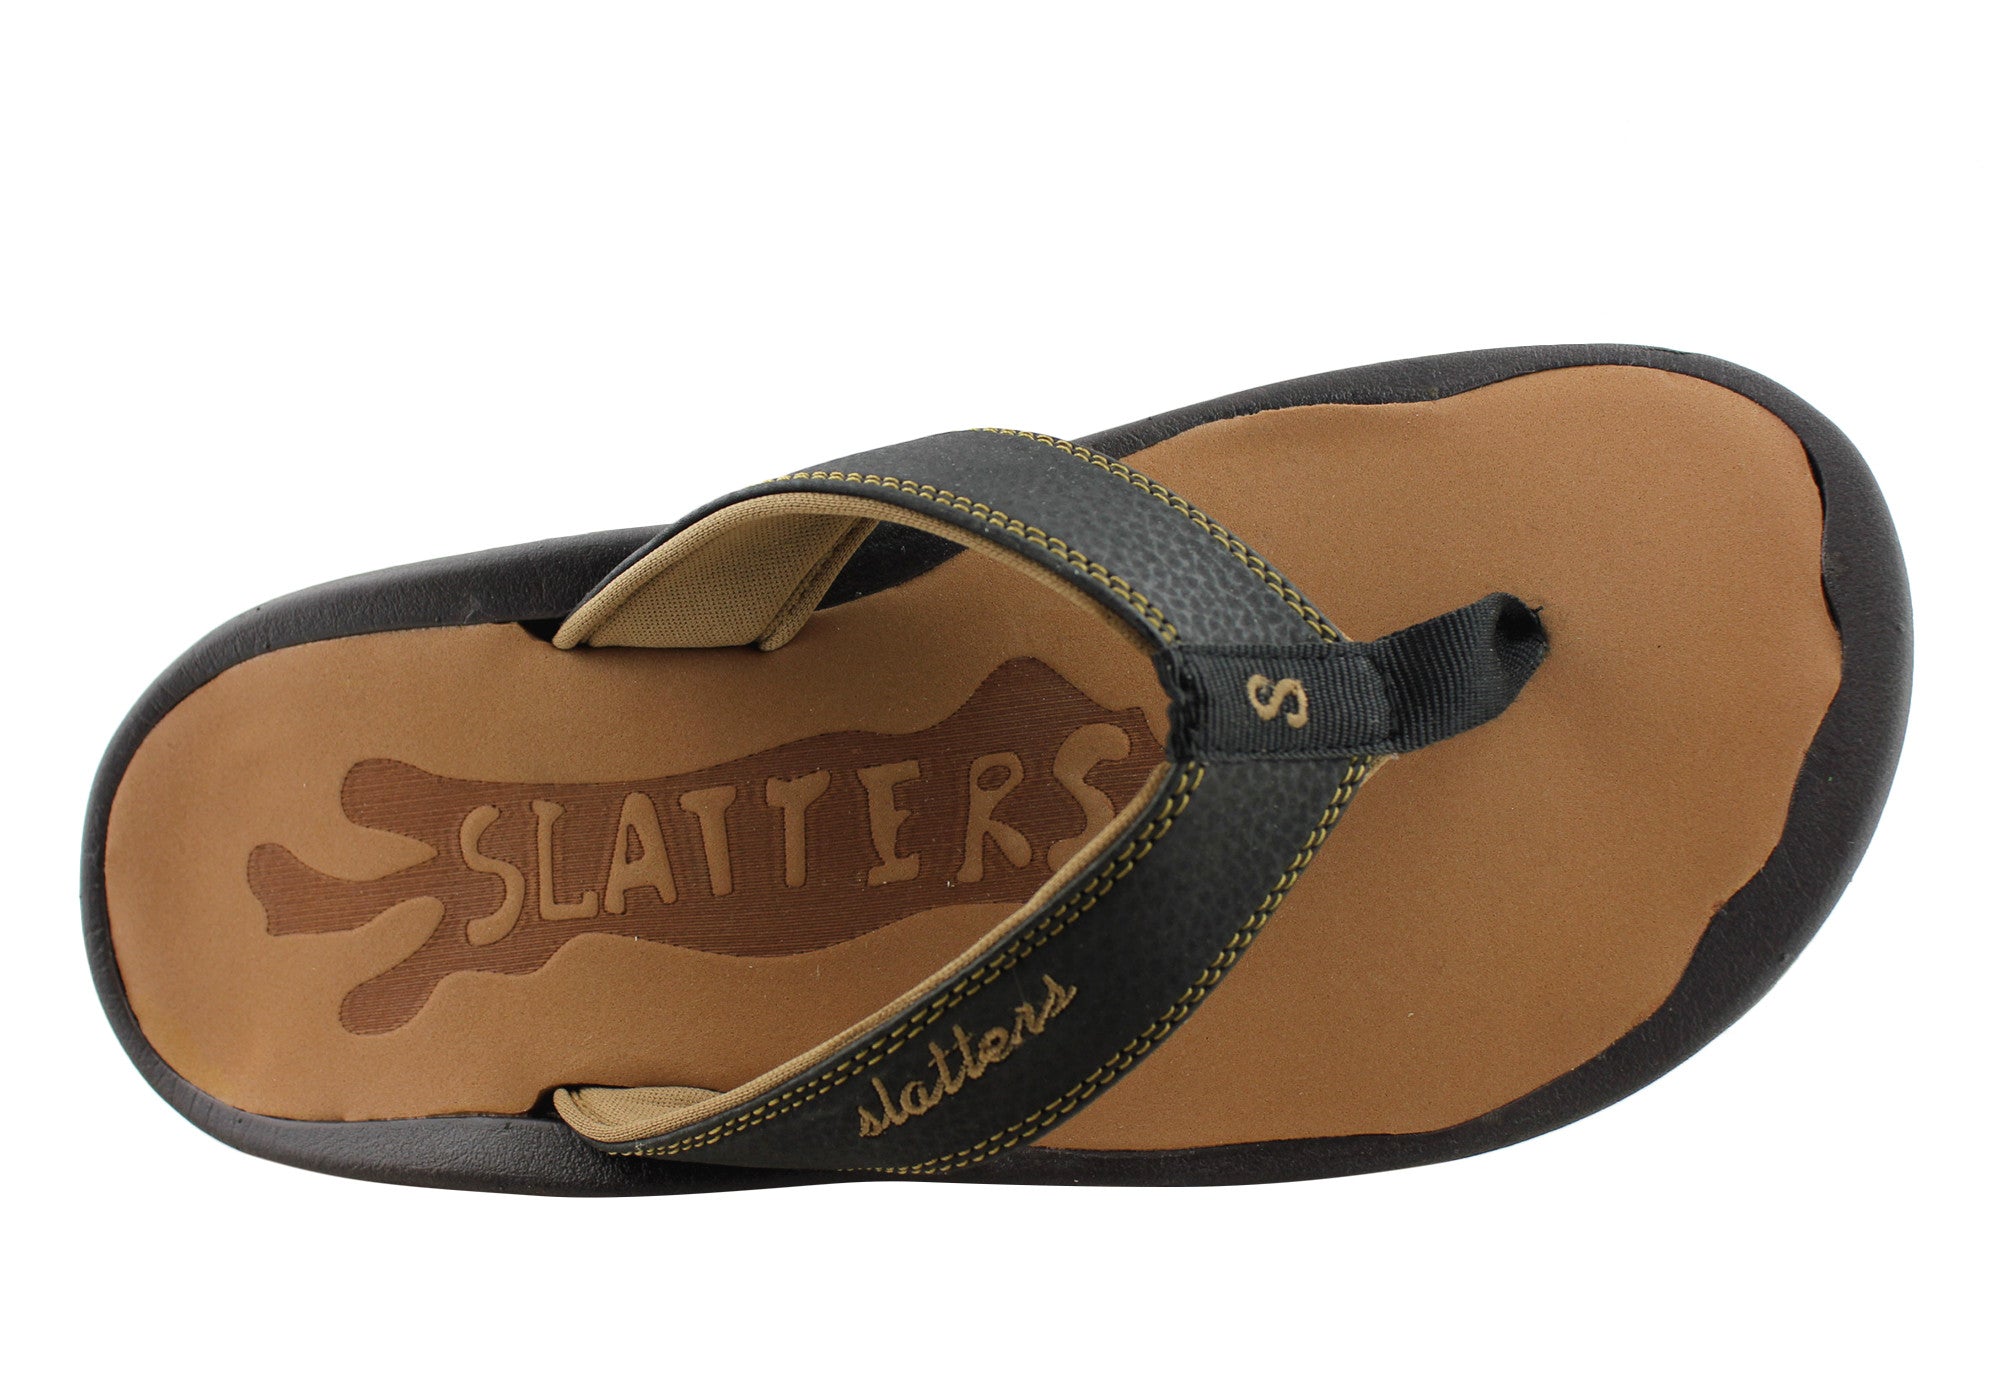 Slatters Splash Mens Summer Comfortable Thongs